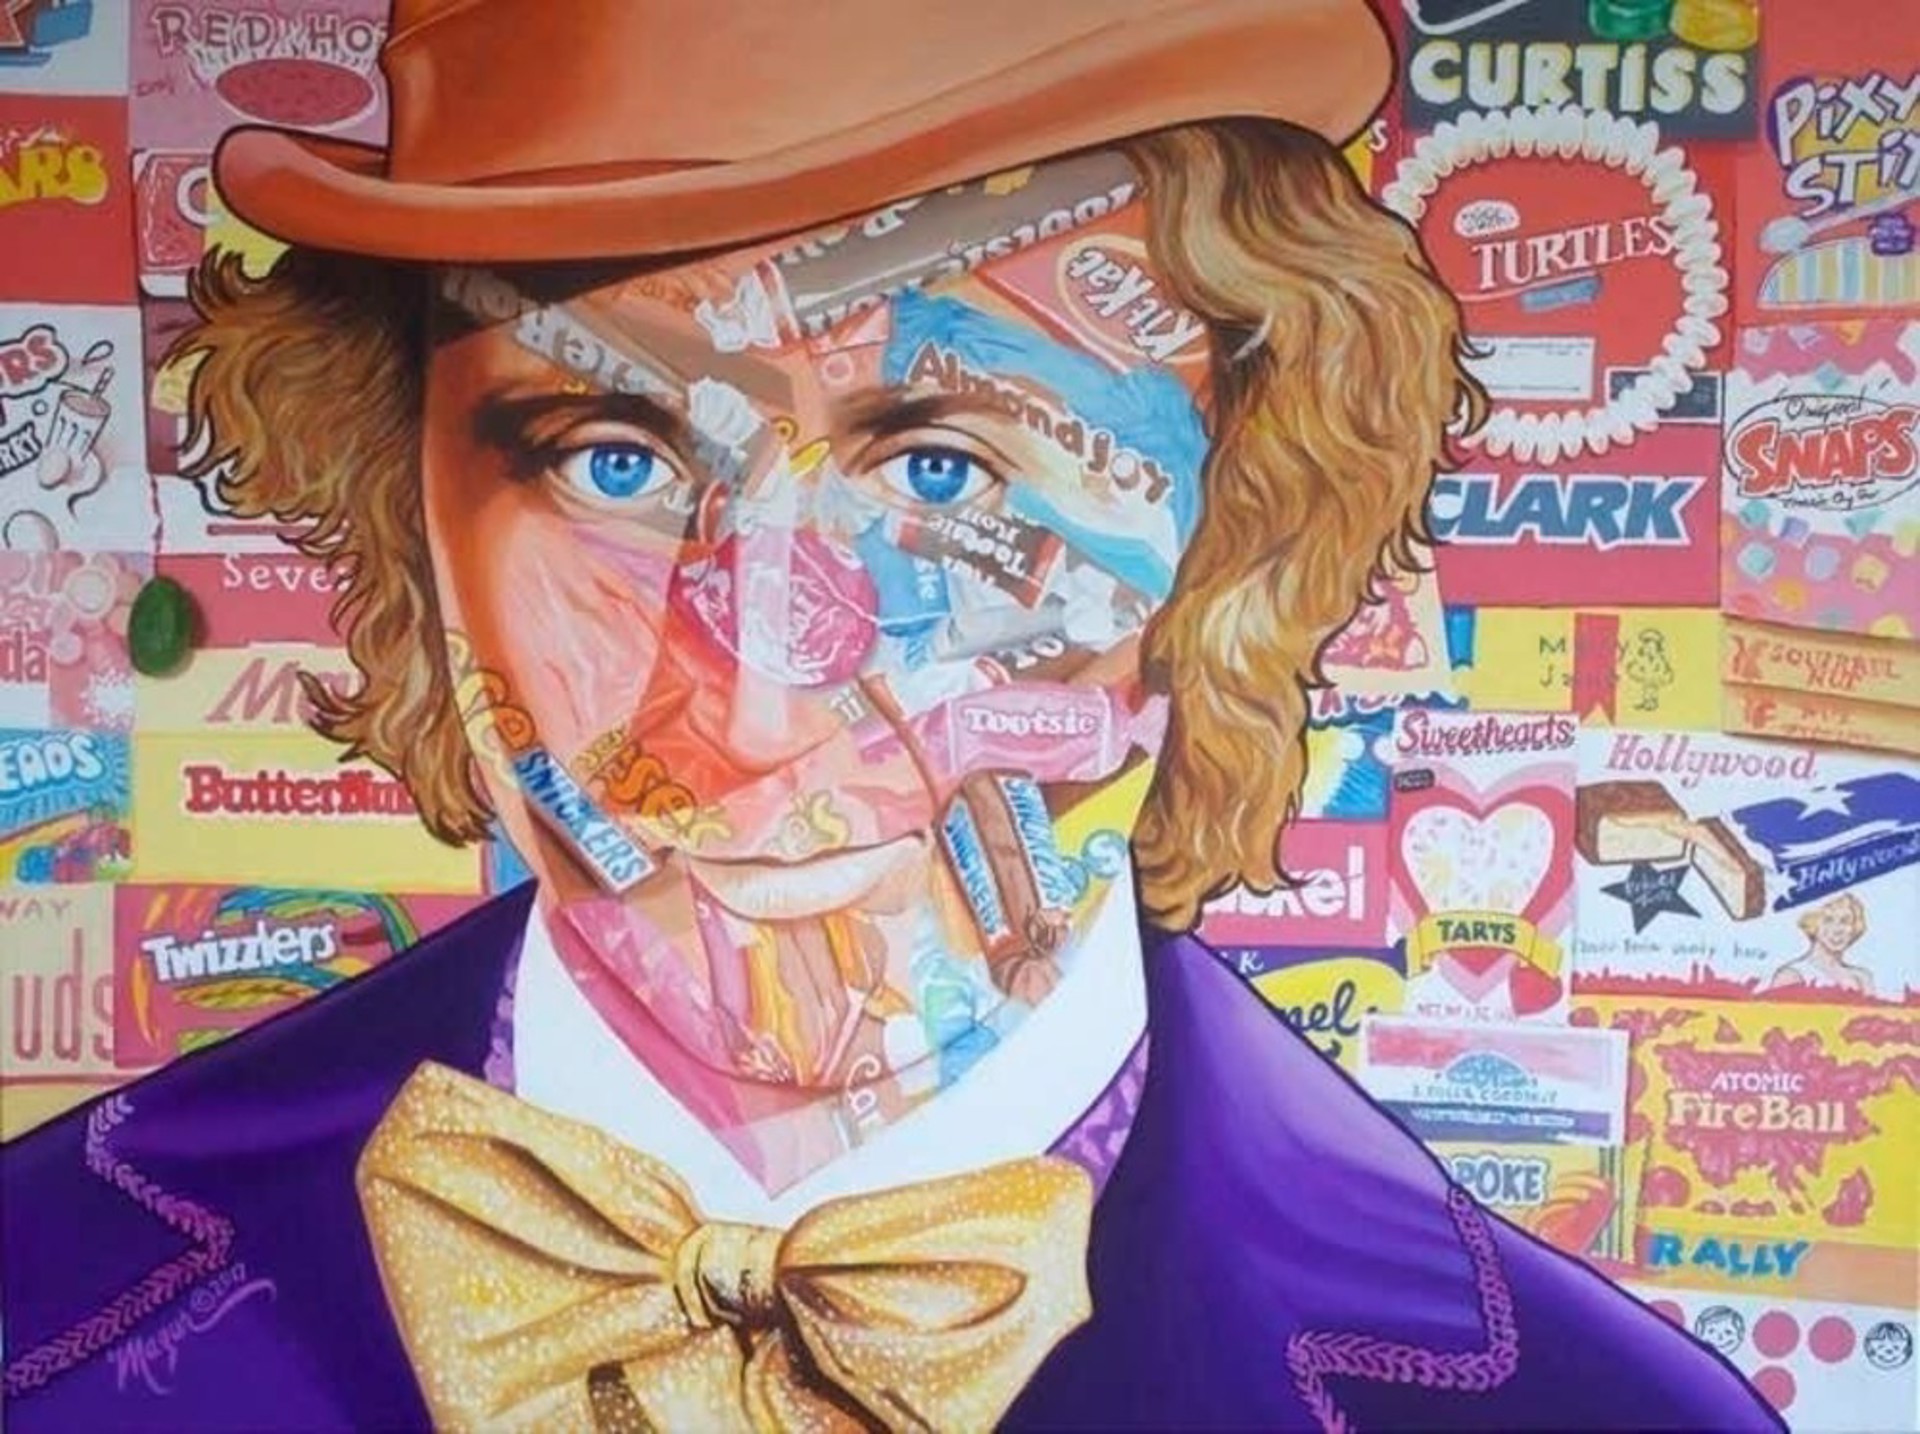 Candy Man Willie Wonka by Ruby Mazur